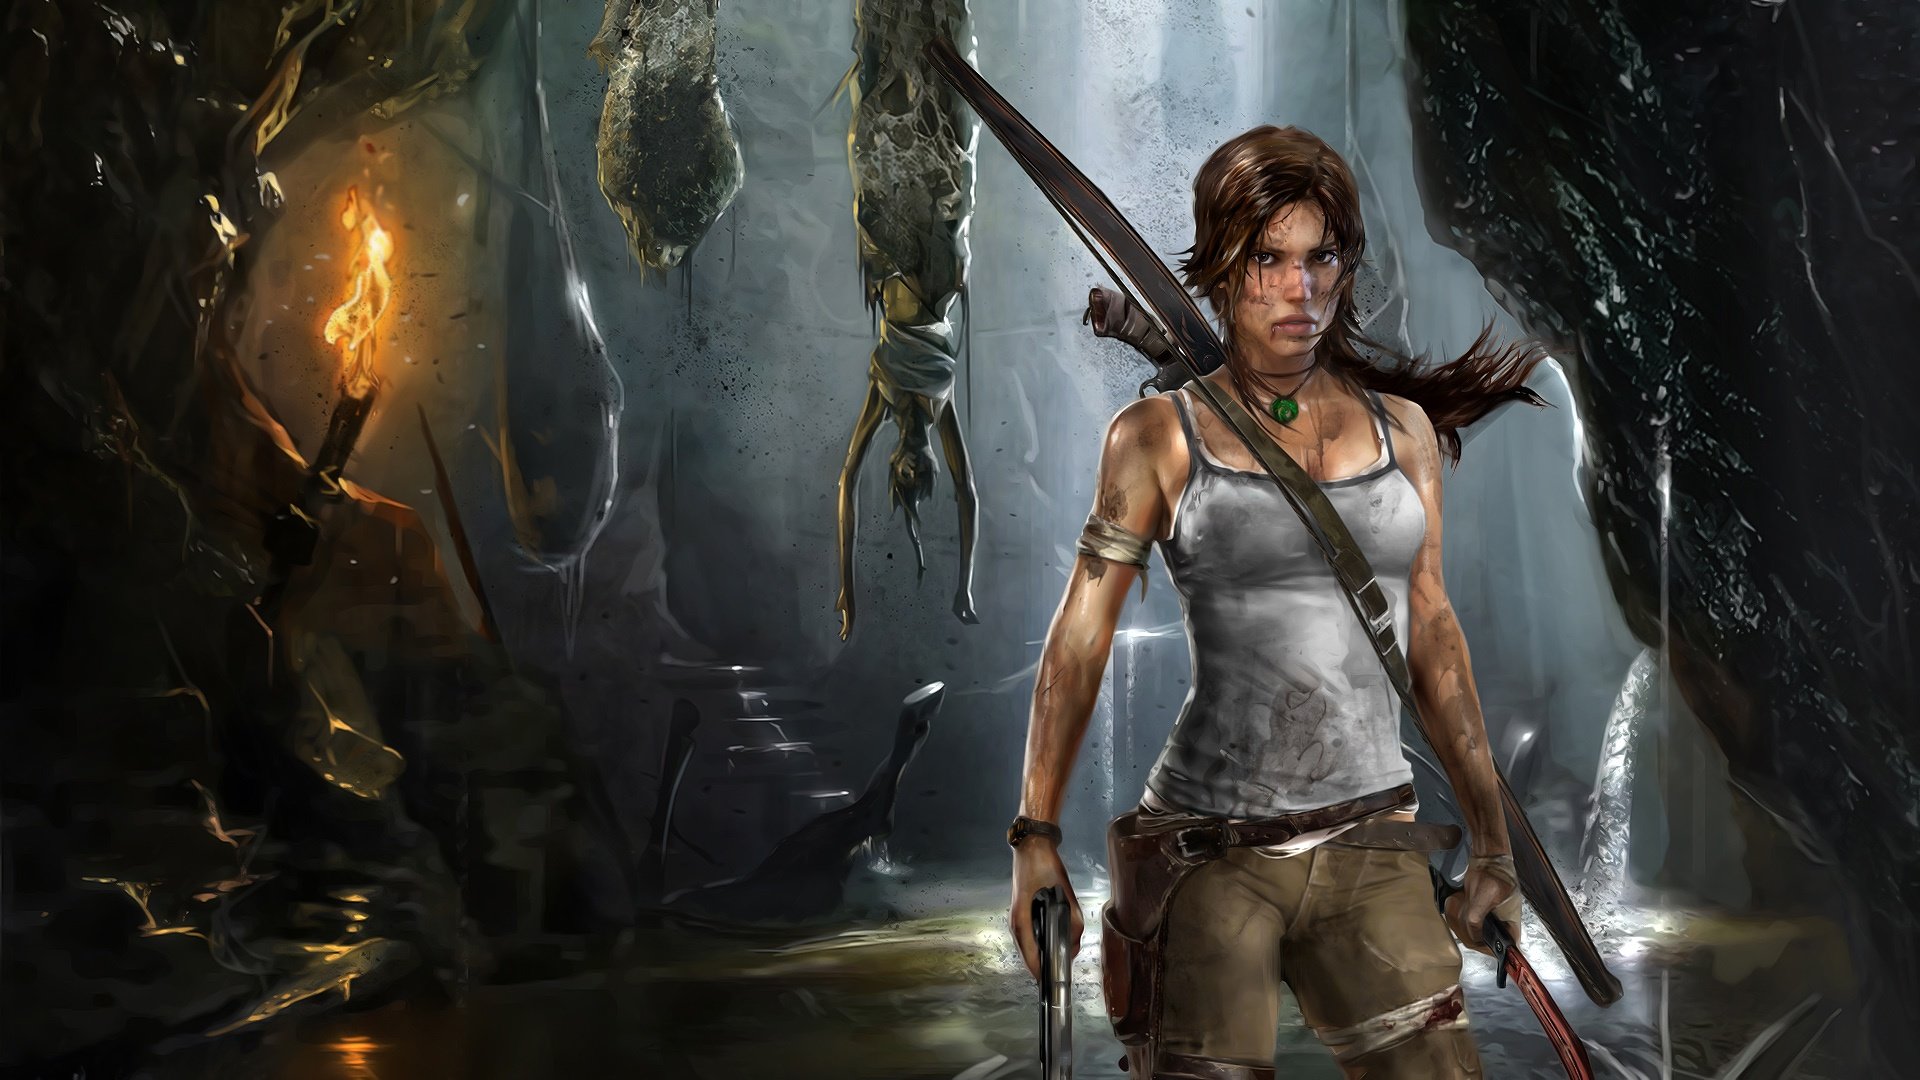 Best Tomb Raider (Lara Croft) background ID:436843 for High Resolution full hd 1920x1080 desktop